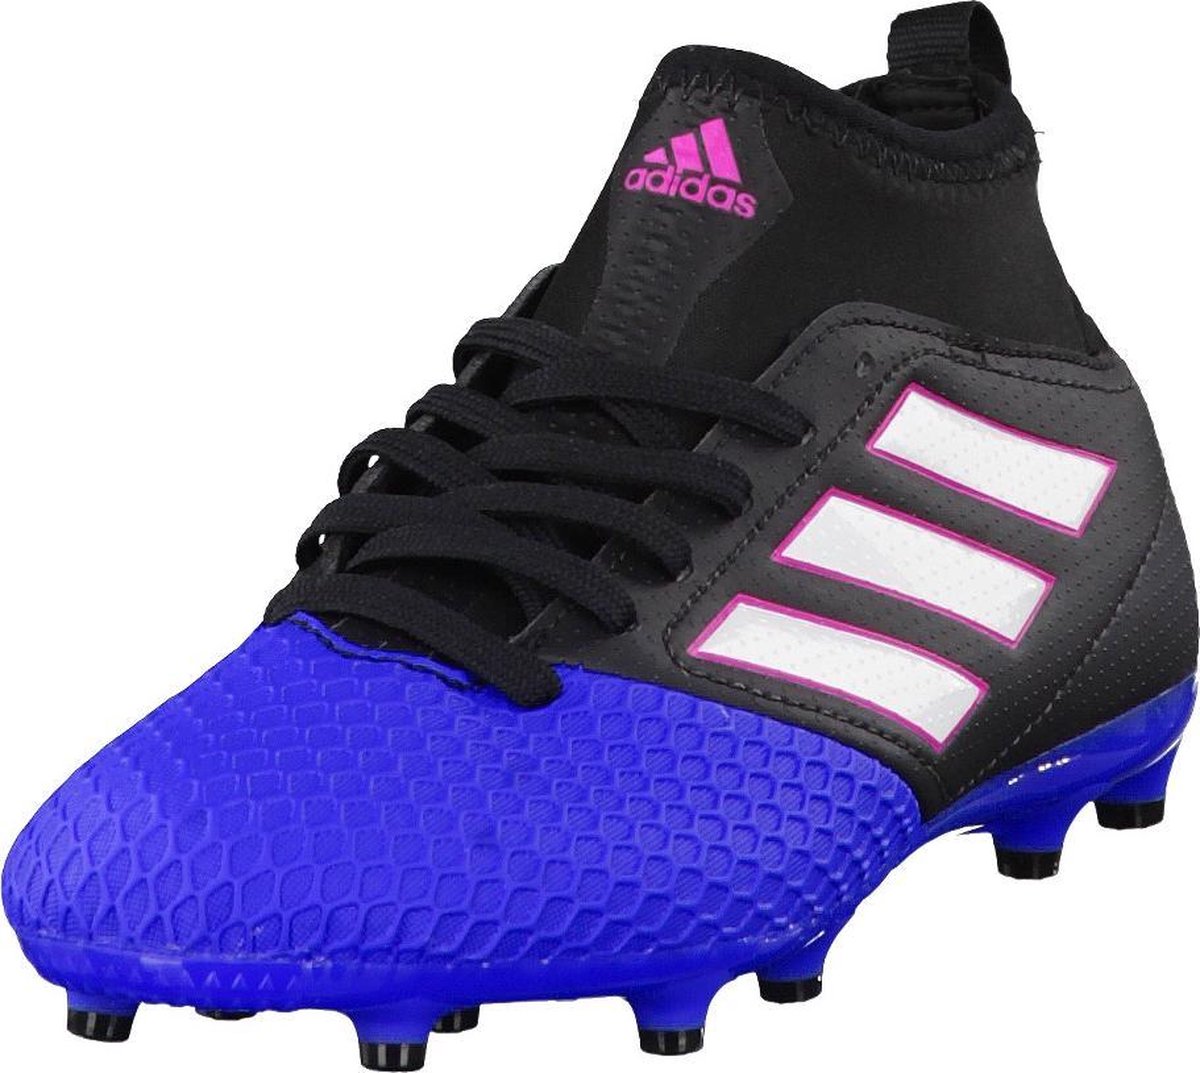 Adidas Voetbalschoenen - Ace 17.3 Junior - Zwart/Kobalt blauw/Wit/Rood - Maat 38 2/3 | bol.com